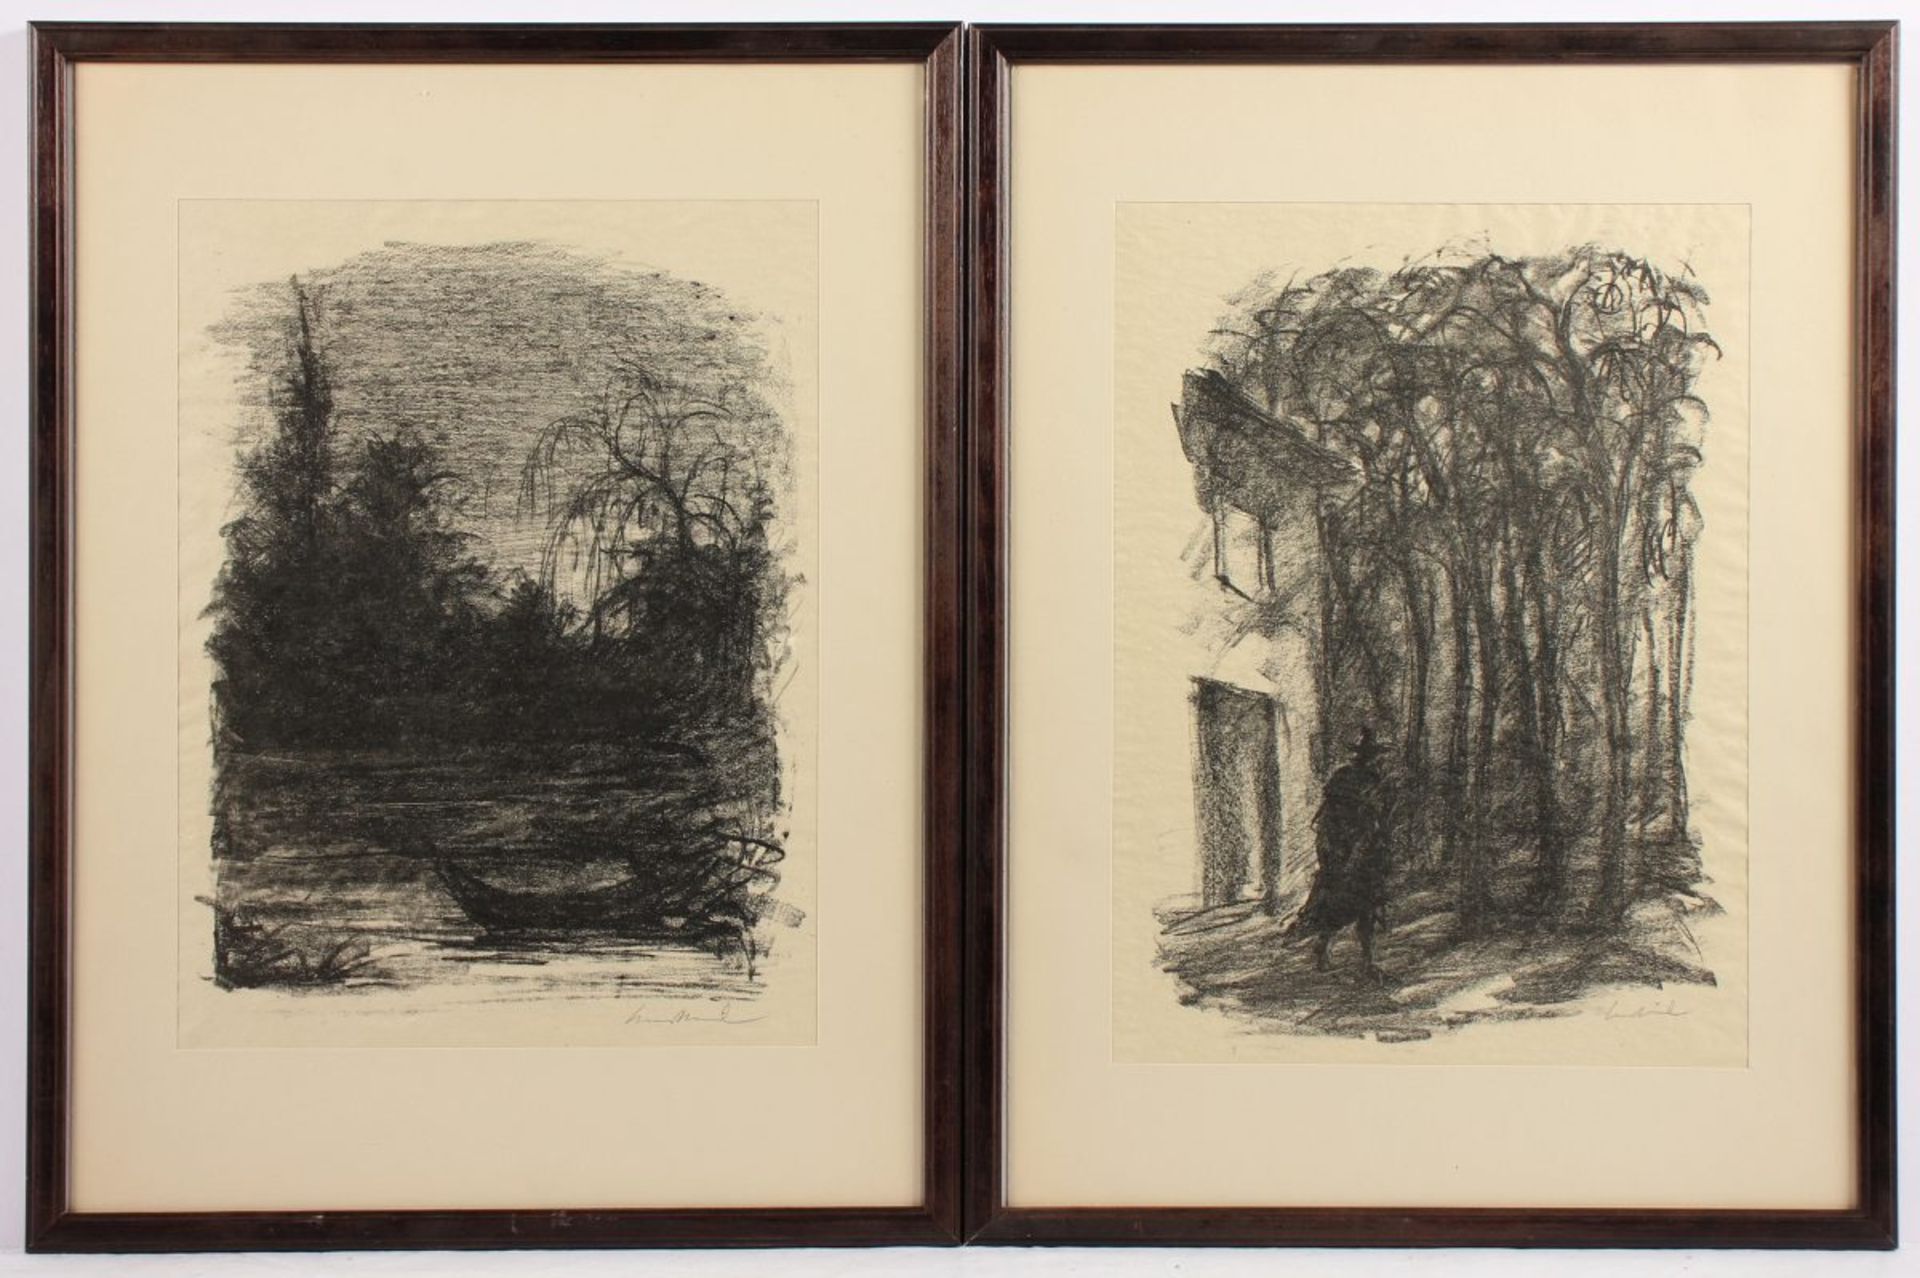 MEID, Hans, zwei Arbeiten, Original-Lithografien/Japan, 29 x 20, handsigniert, Goethe, Gedichte,